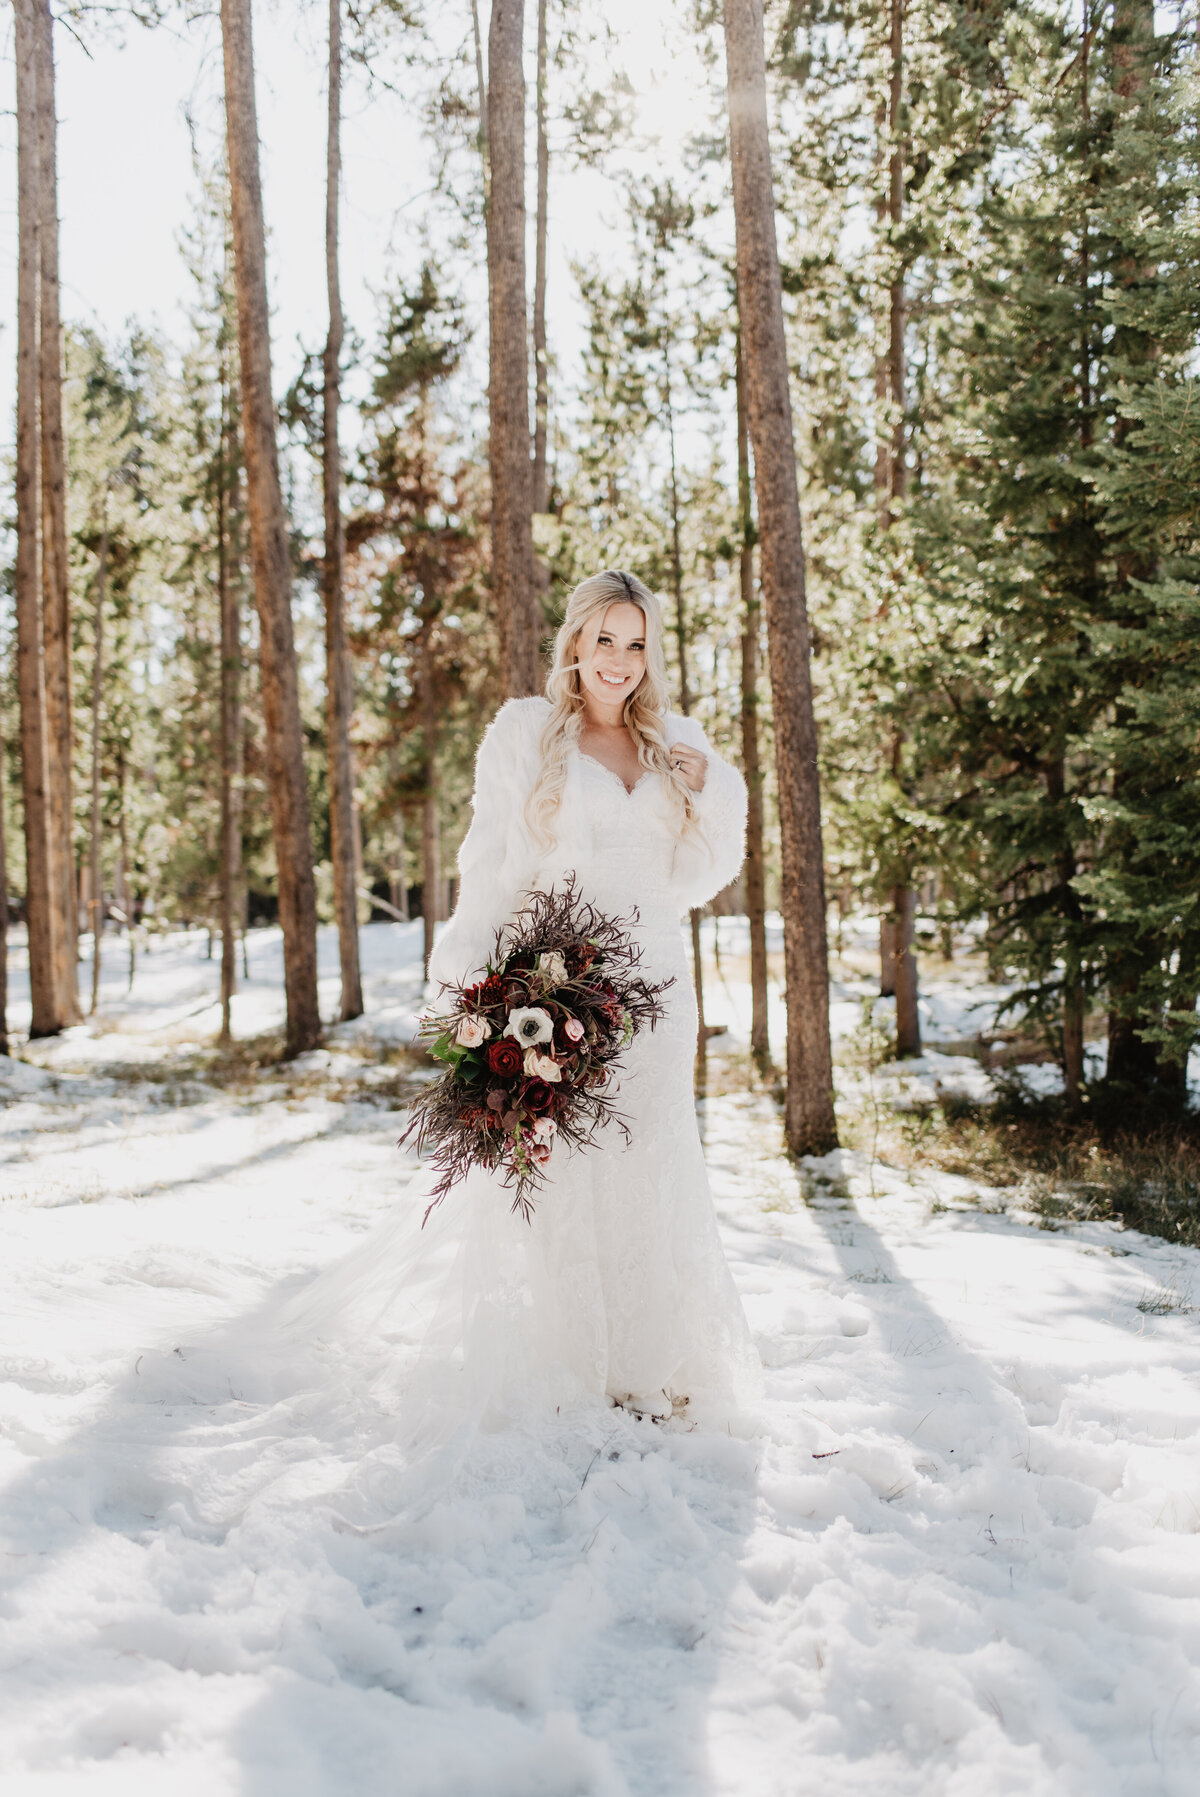 Jackson Hole Photographers capture winter bridal portraits in the snow